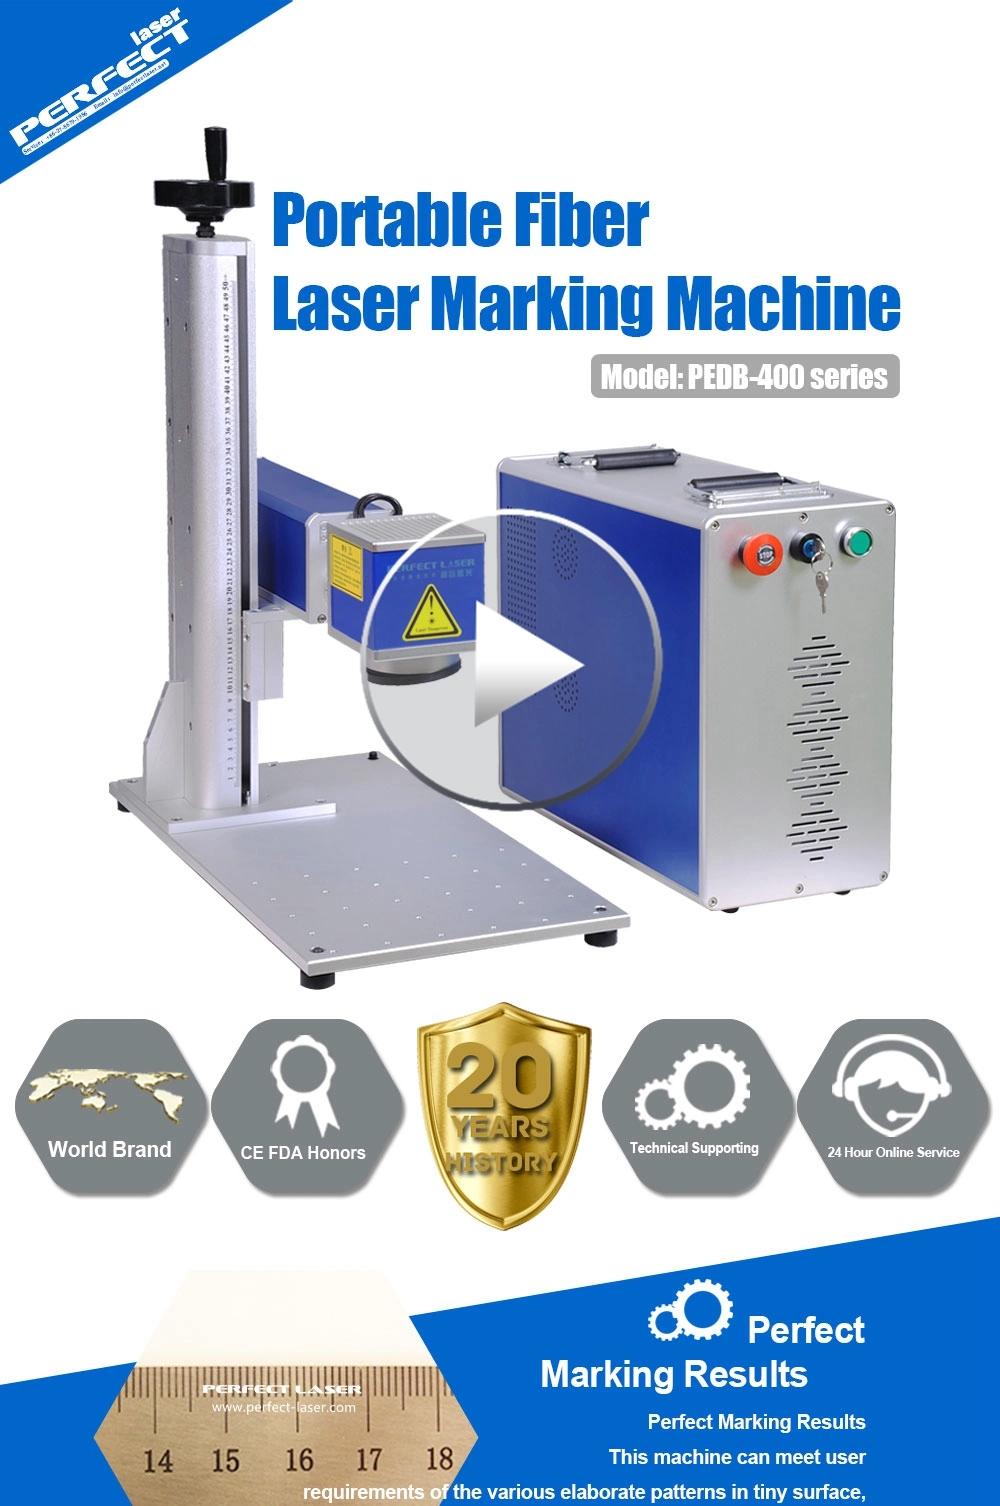 Ipg Raycus Laser Marker Metals Copper Fiber Laser Marking Machine for Sale